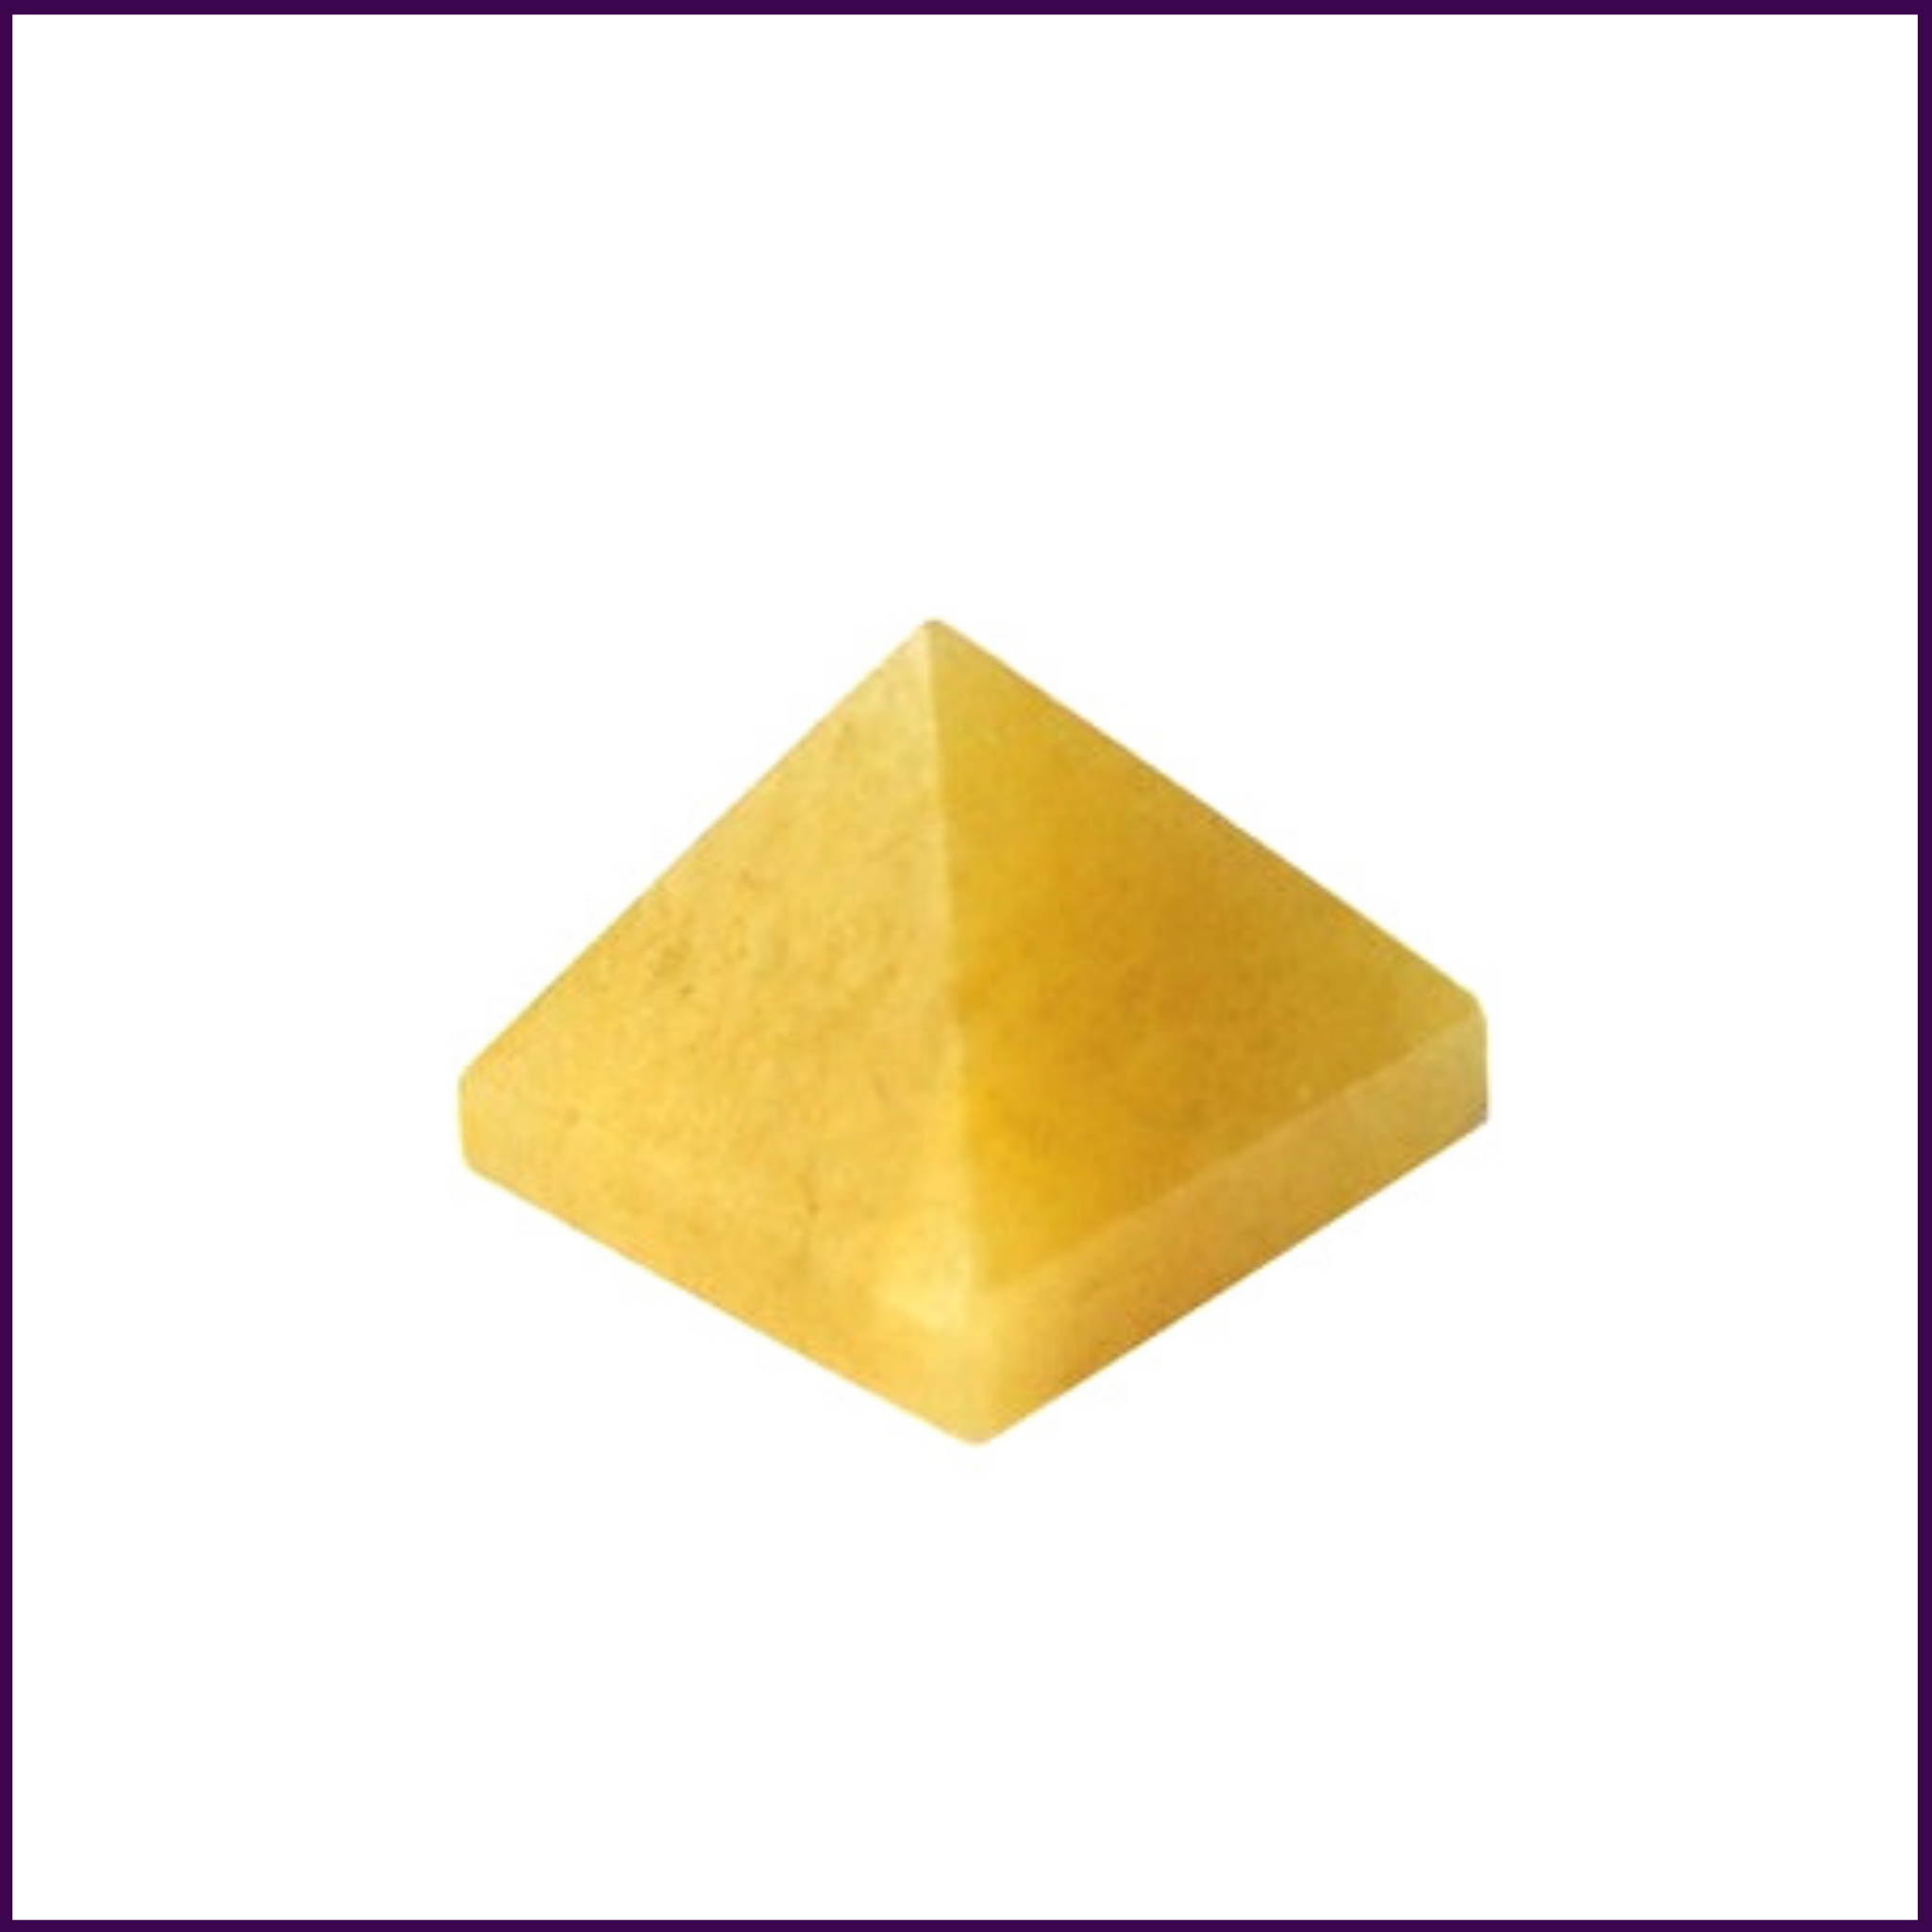 Yellow Jade Crystal Pyramid Stone for Attracting Abundance - 51pyramids